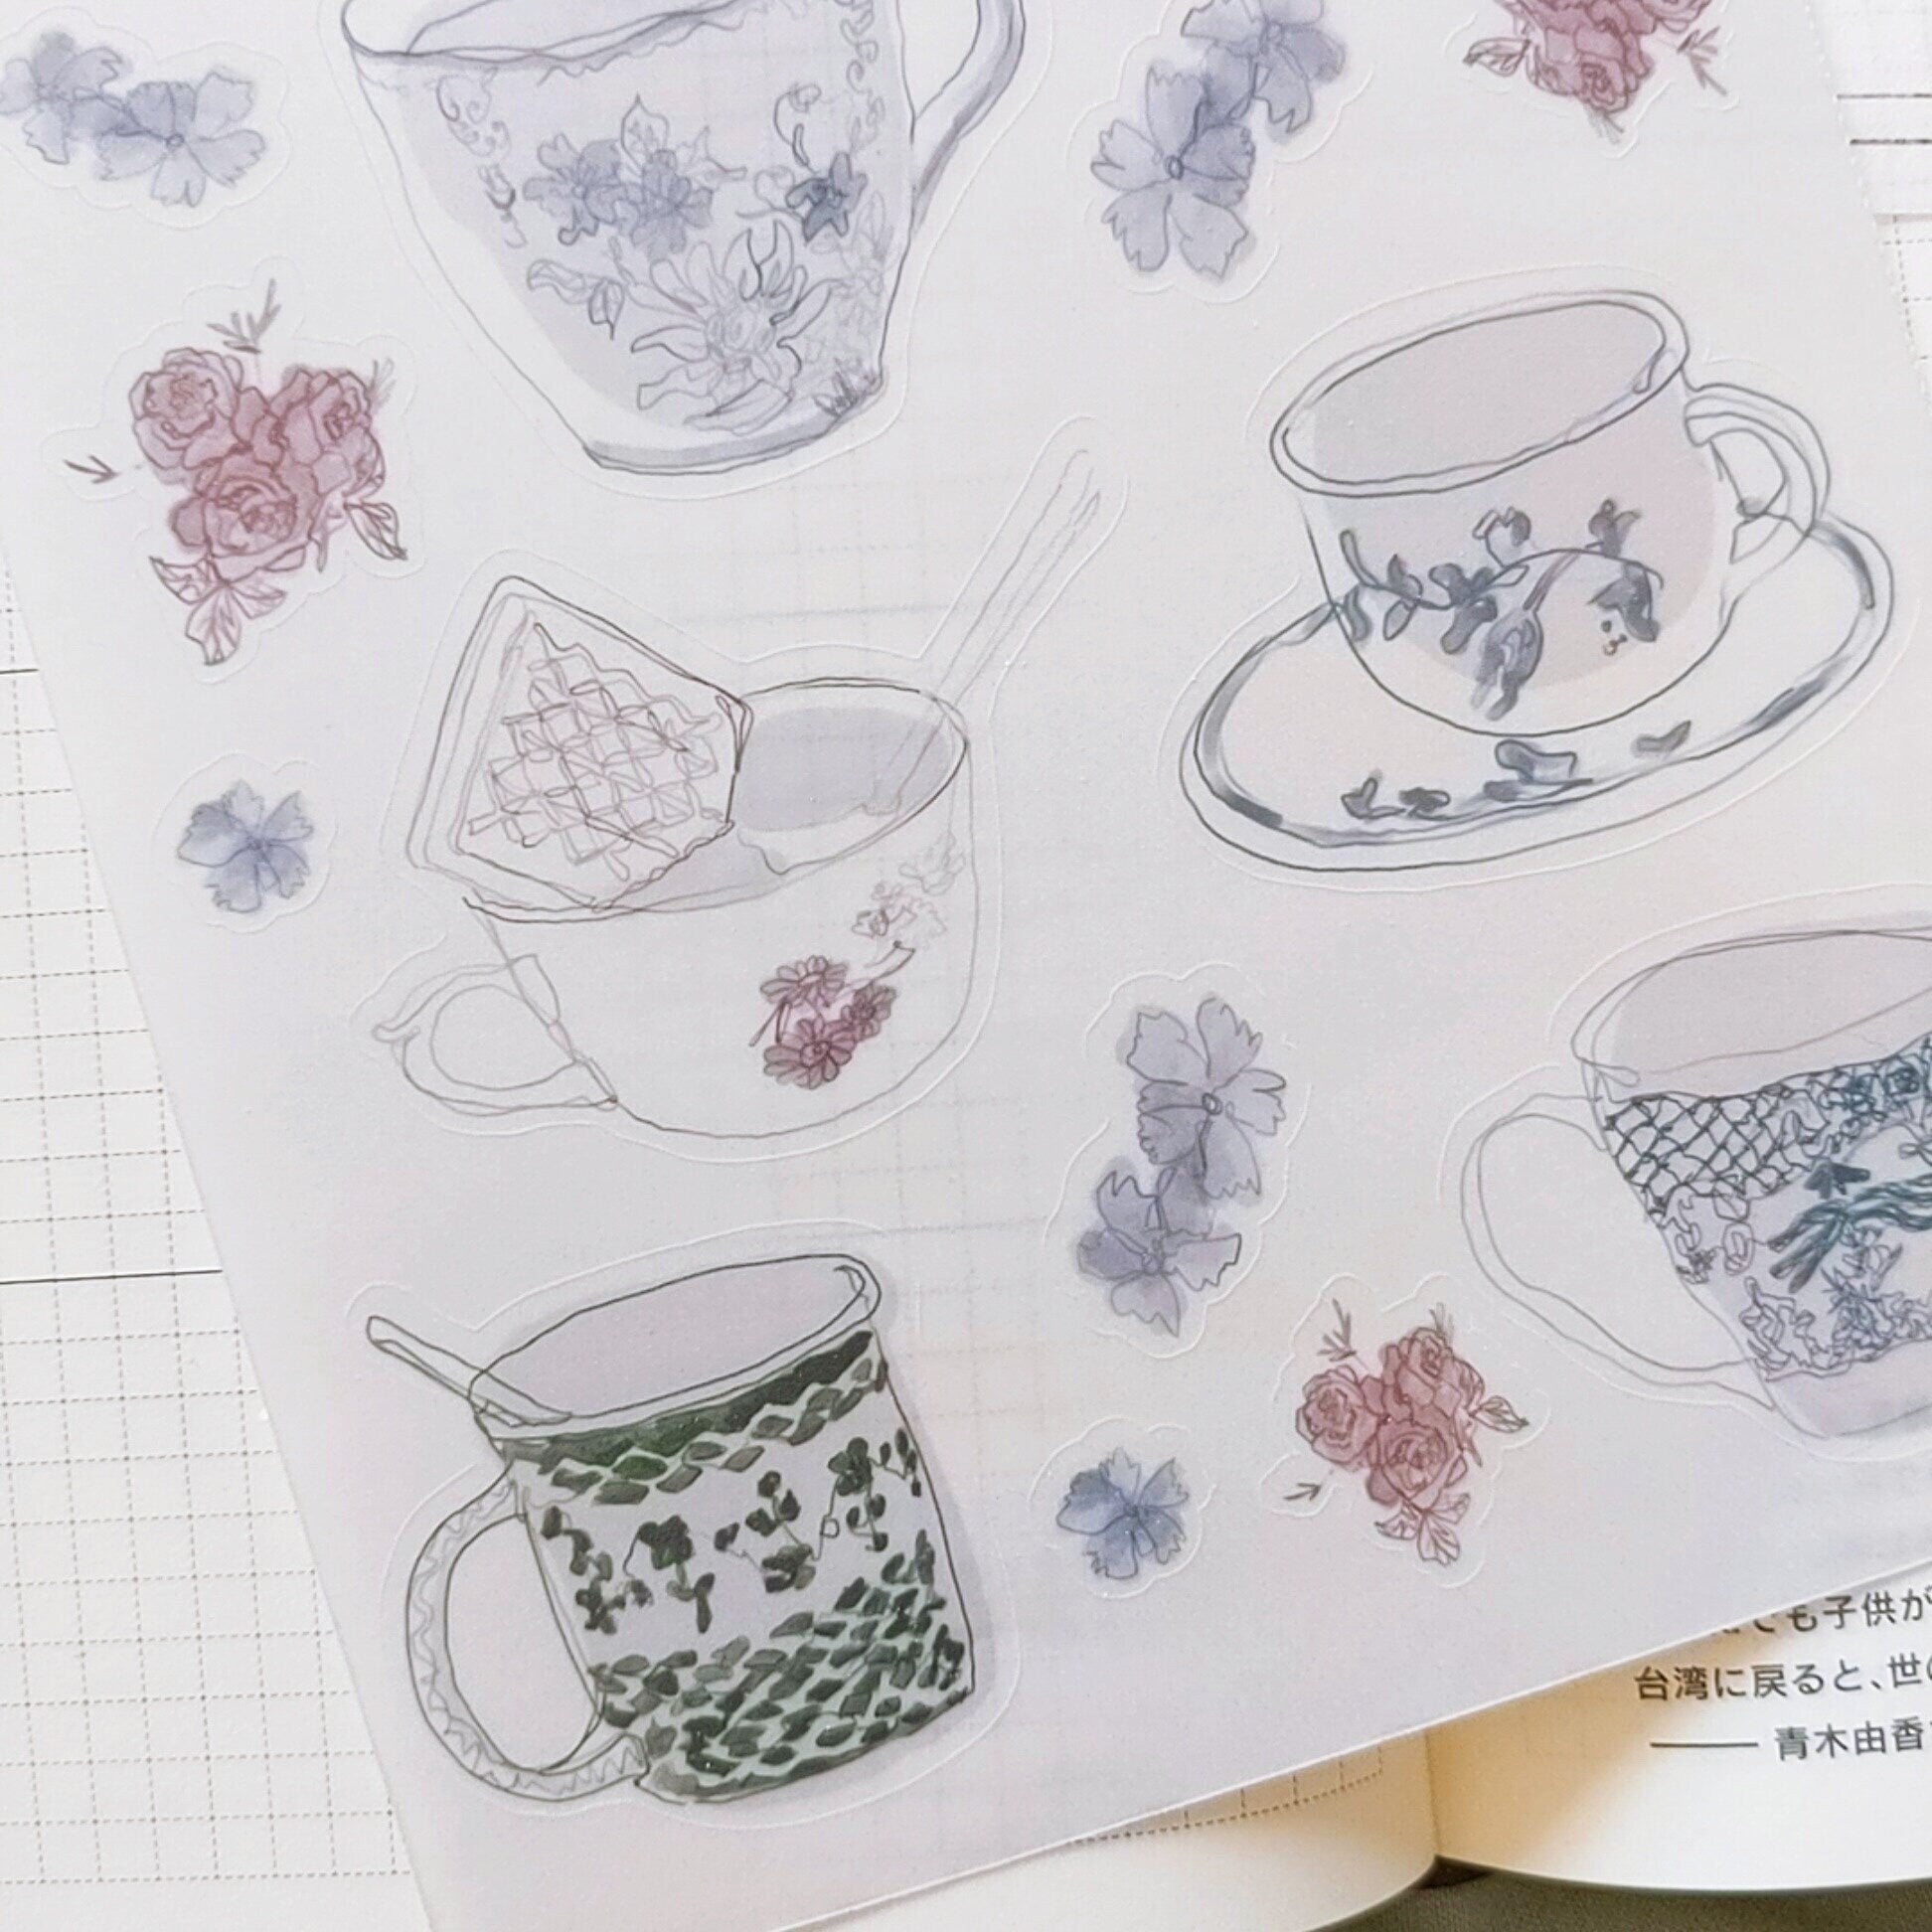 sticker sheet | a soft tea time | cozy vintage | tea lover